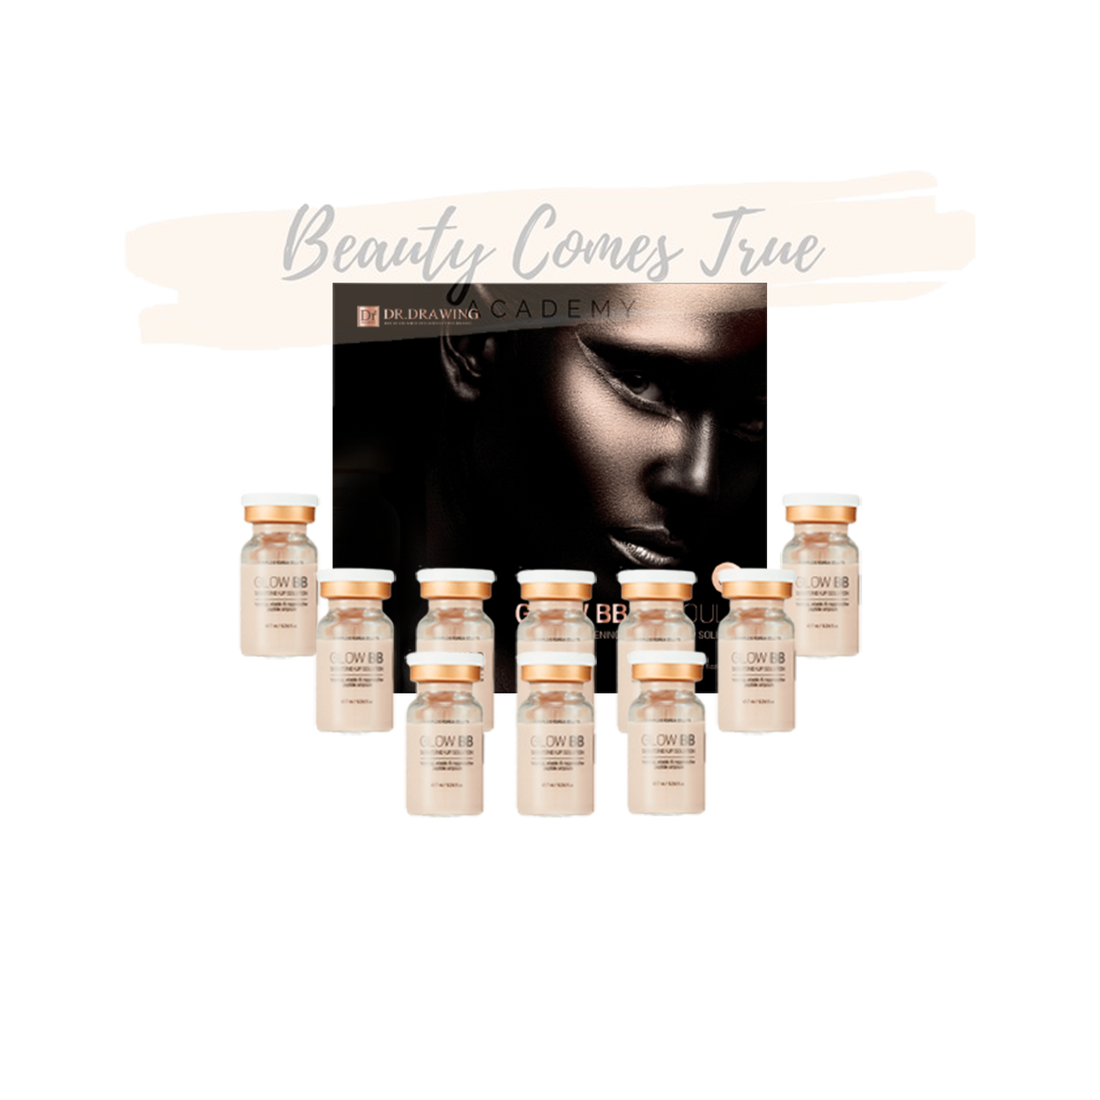 BB Glow Serum Ivory 7ml x 10 bottles No.21 - Beauty Comes True Academy